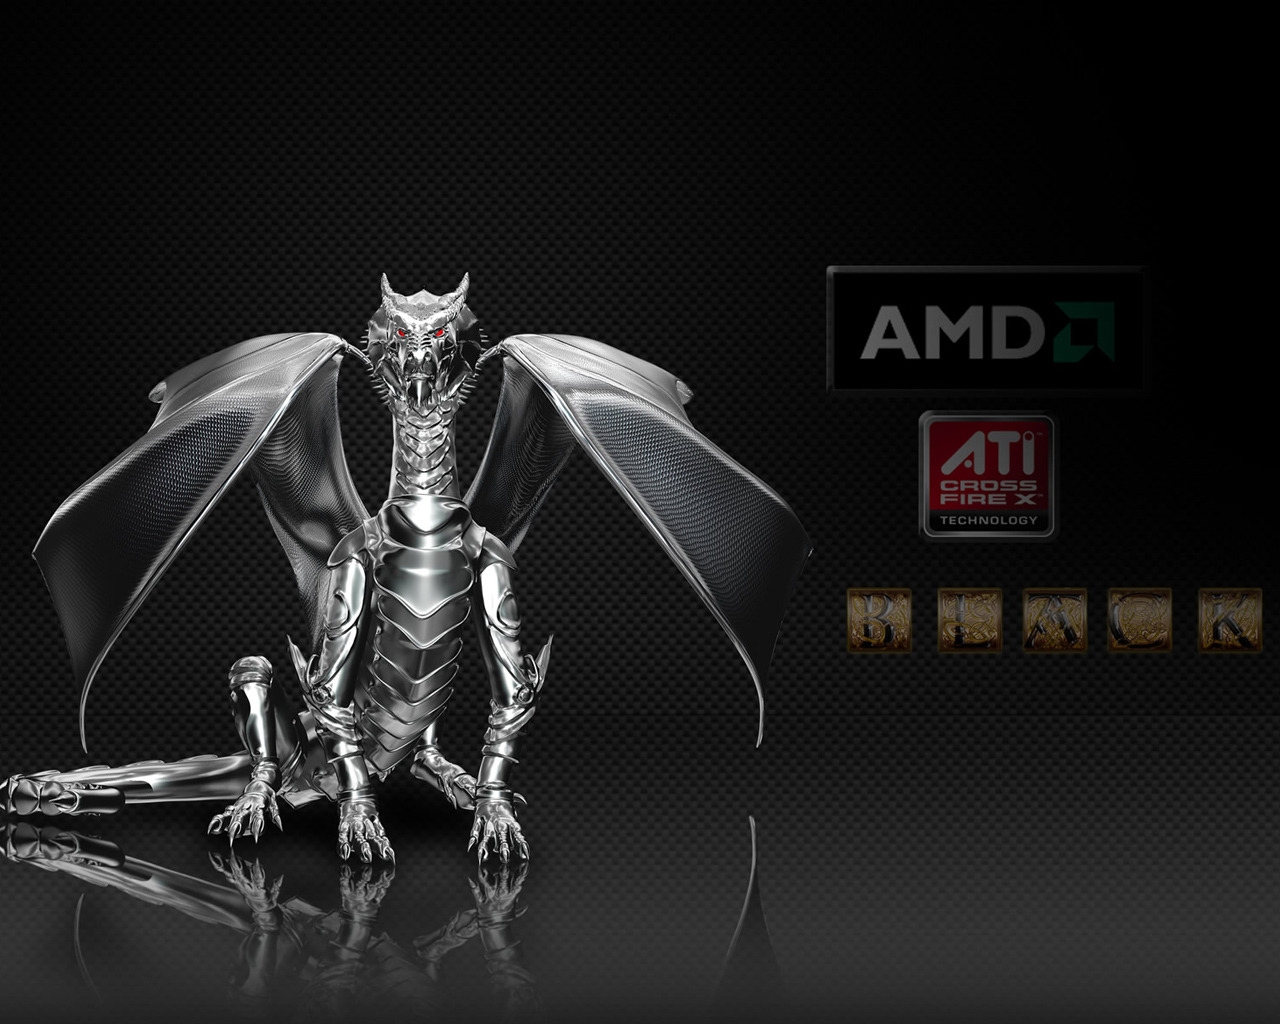 AMD Dragon Black for 1280 x 1024 resolution